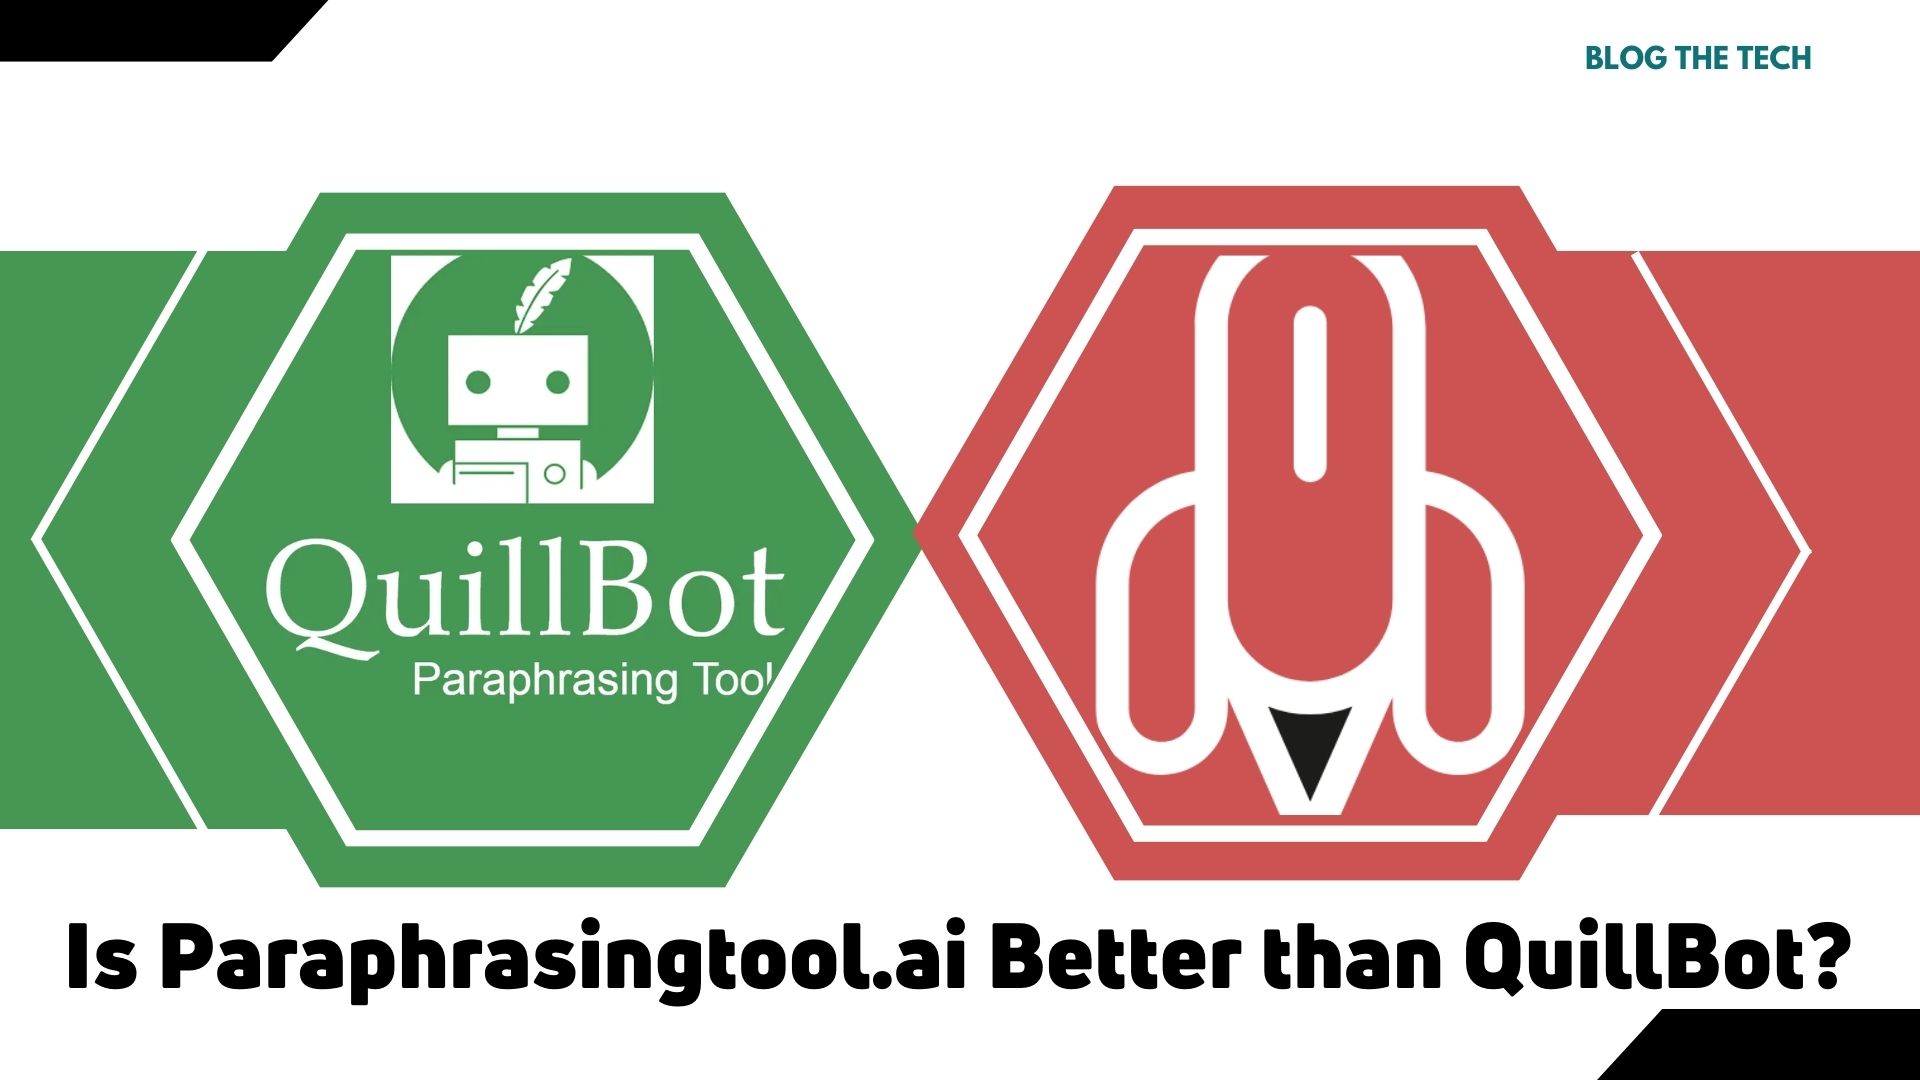 paraphrasingtool-ai-better-than-quillbot-featured